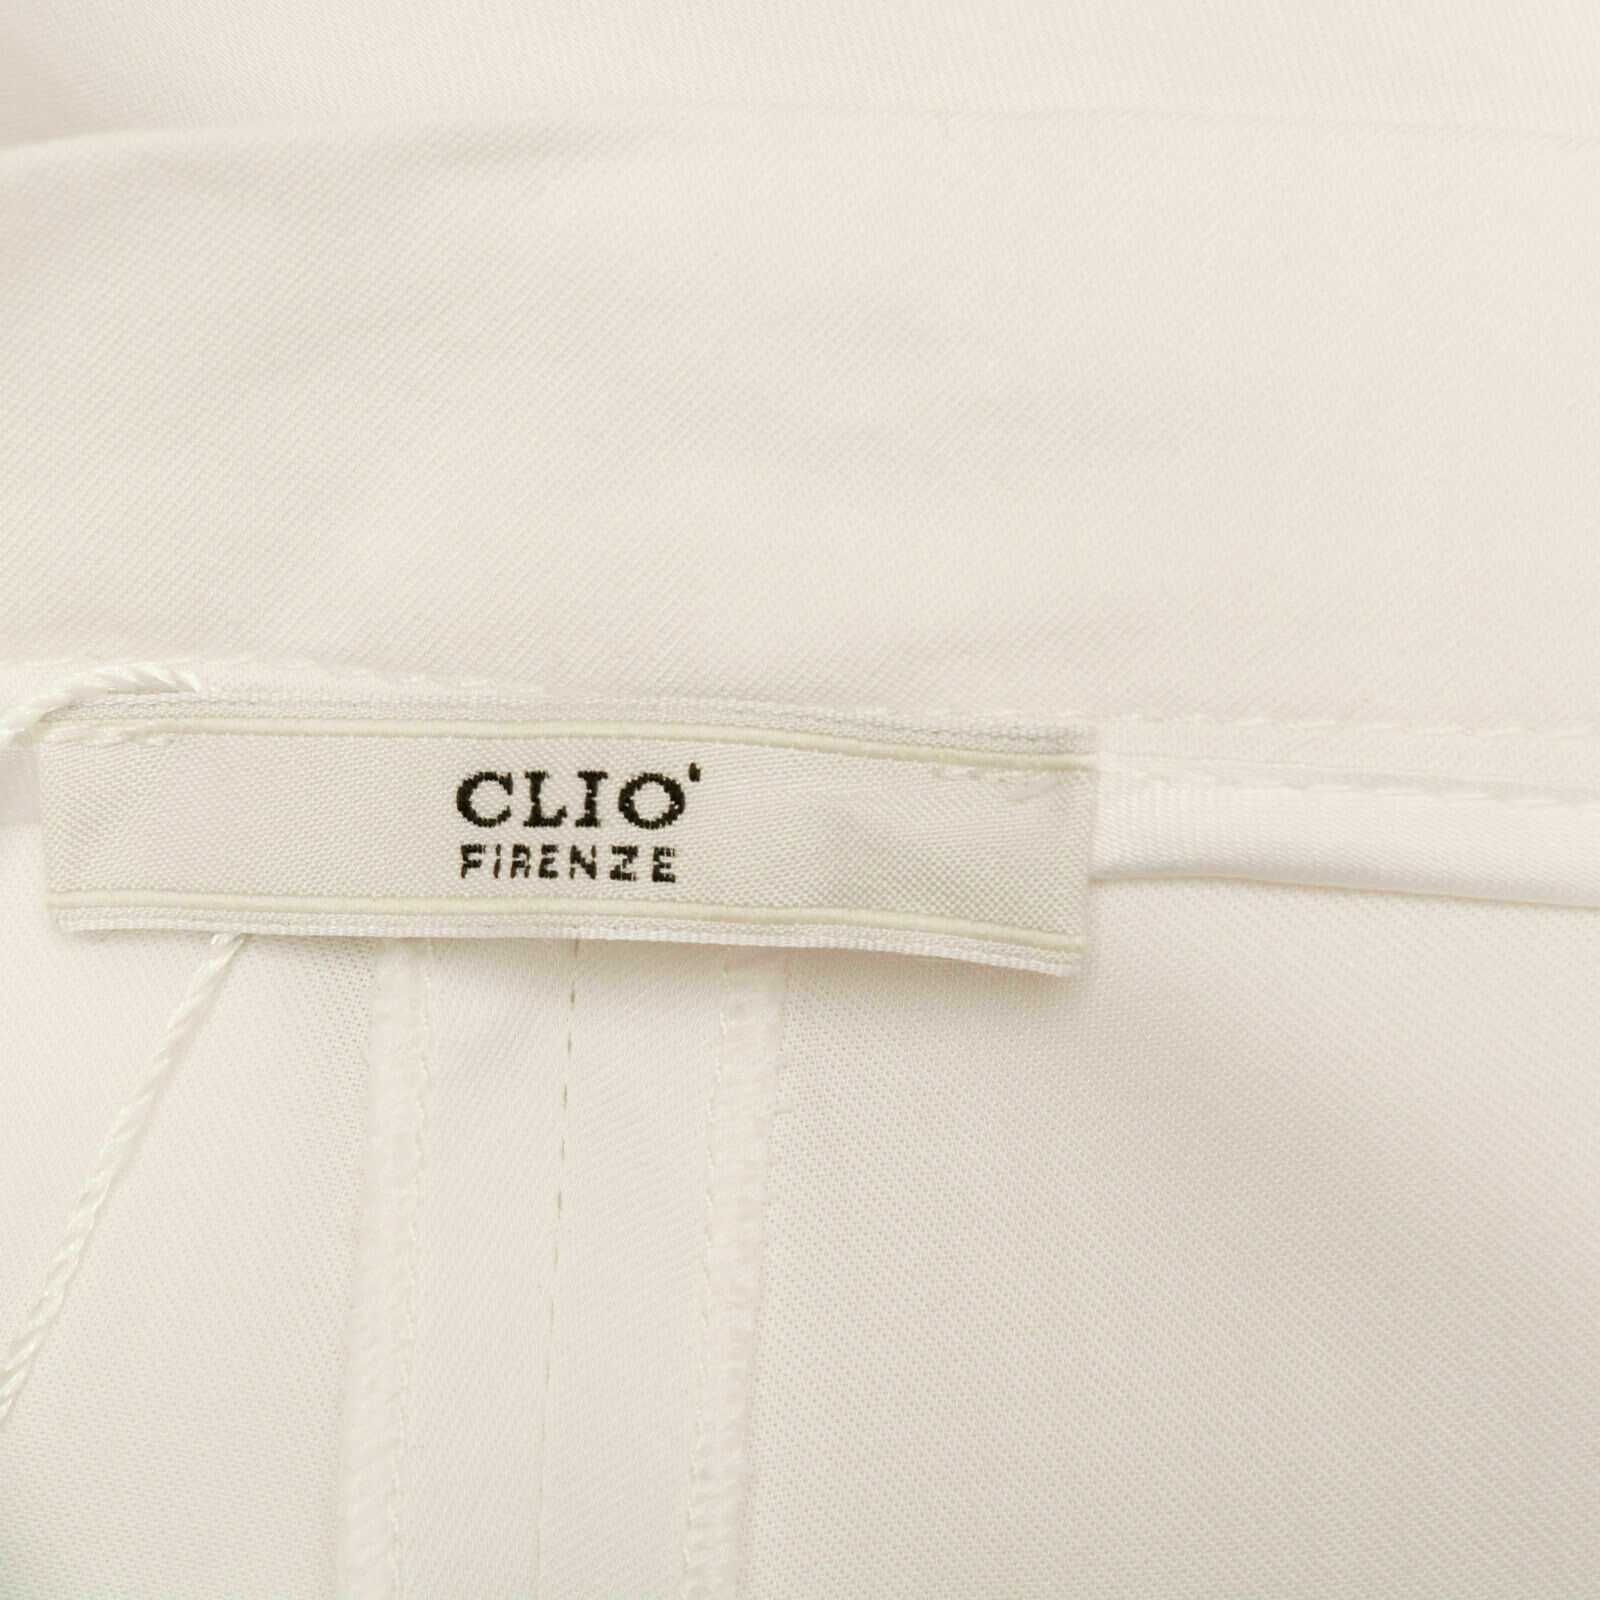 CLIO FIRENZE Италия Новые брюки вискоза IT42 M белые 140Евро